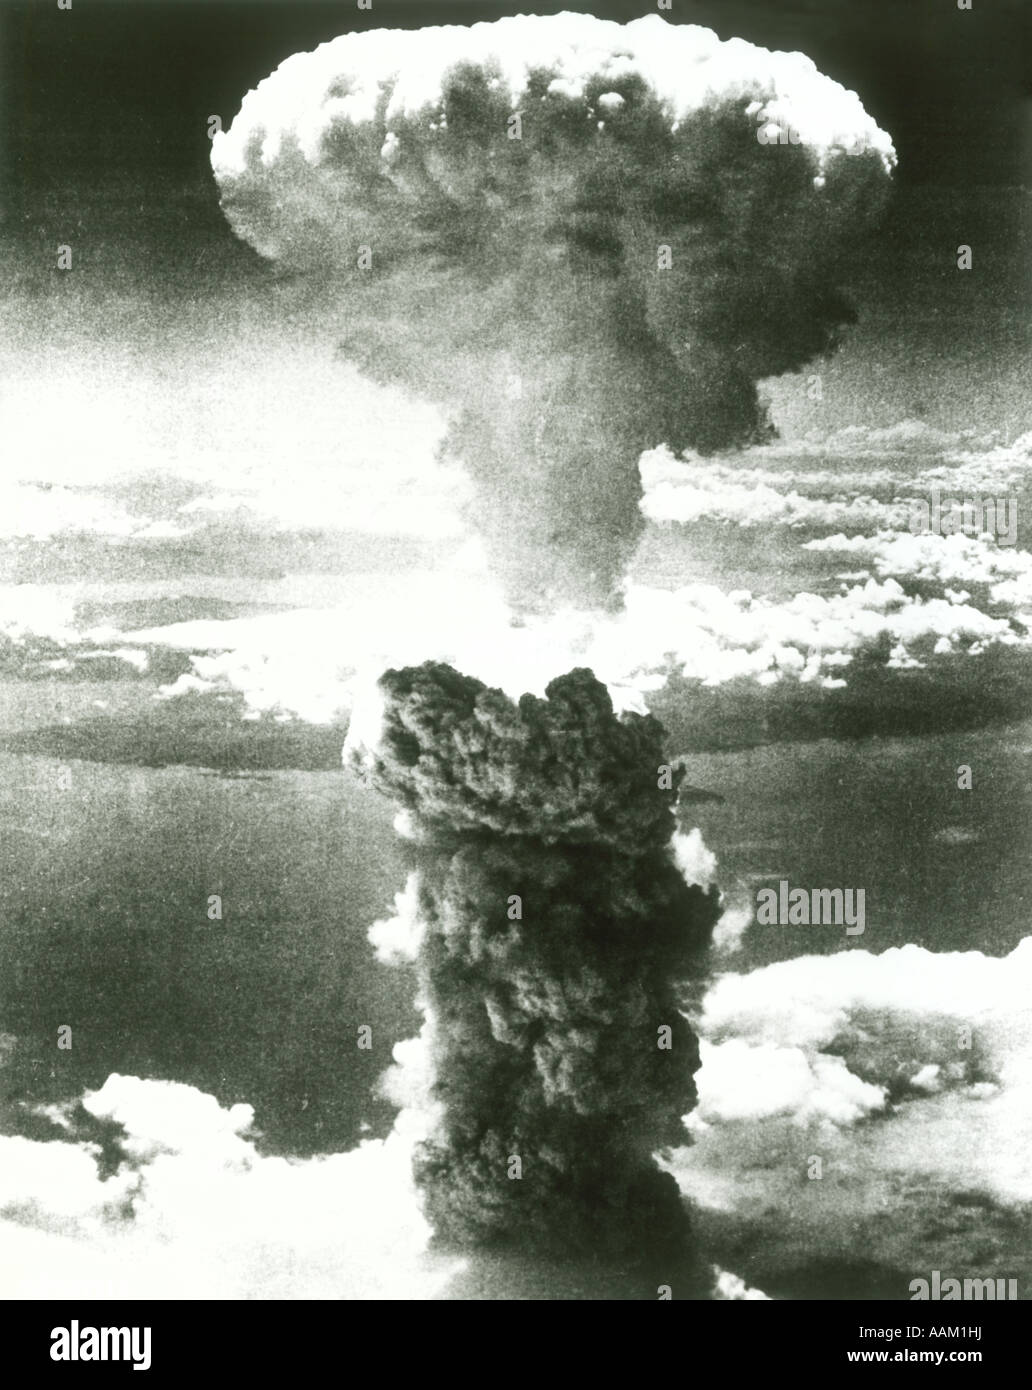 1950s ATOMIC BOMB EXPLOSION MUSHROOM CLOUD Stock Photo